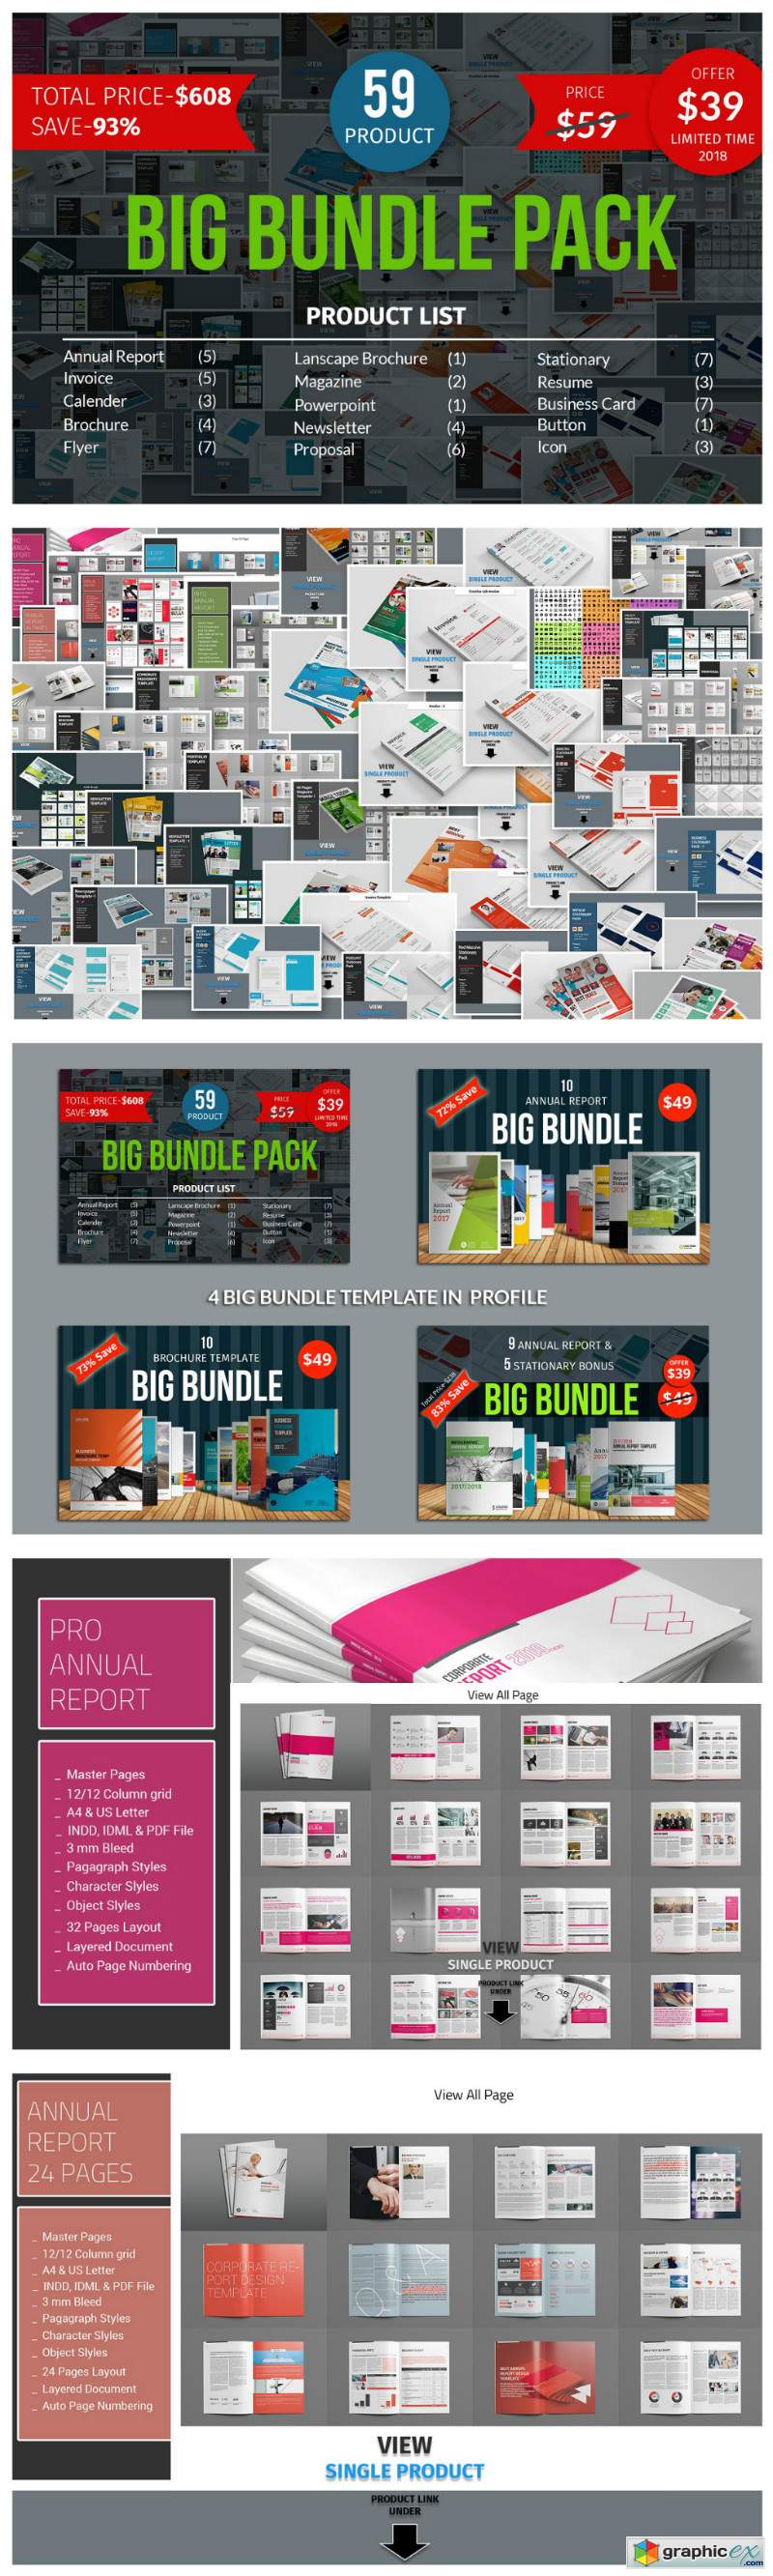 big bundle pack  u00bb free download vector stock image